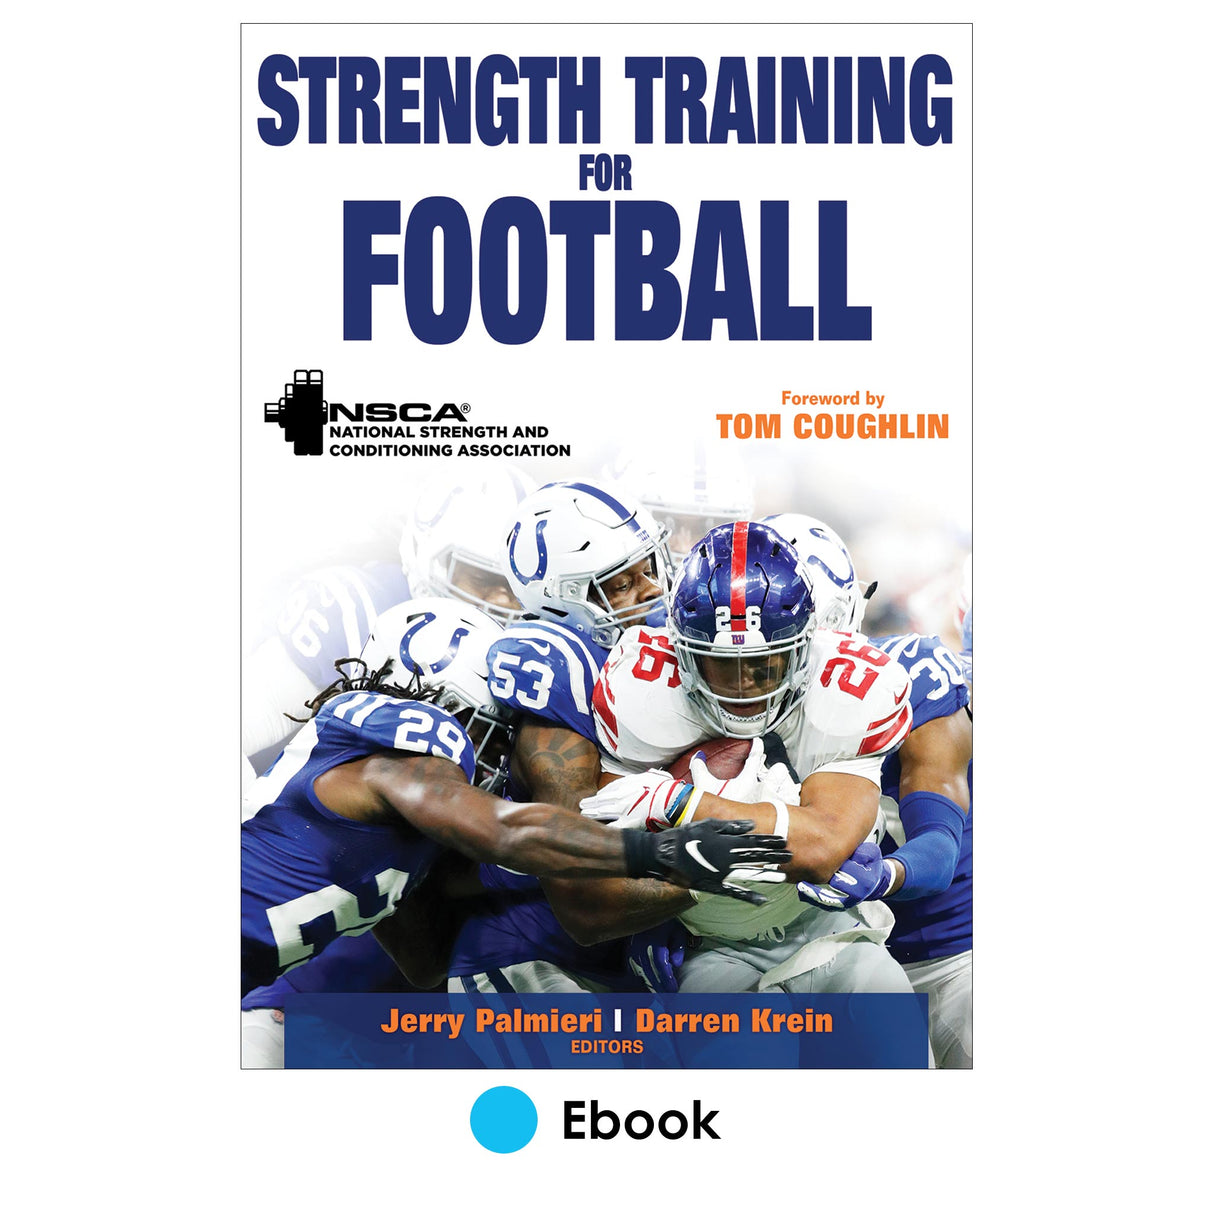 Strength Training for Football epub